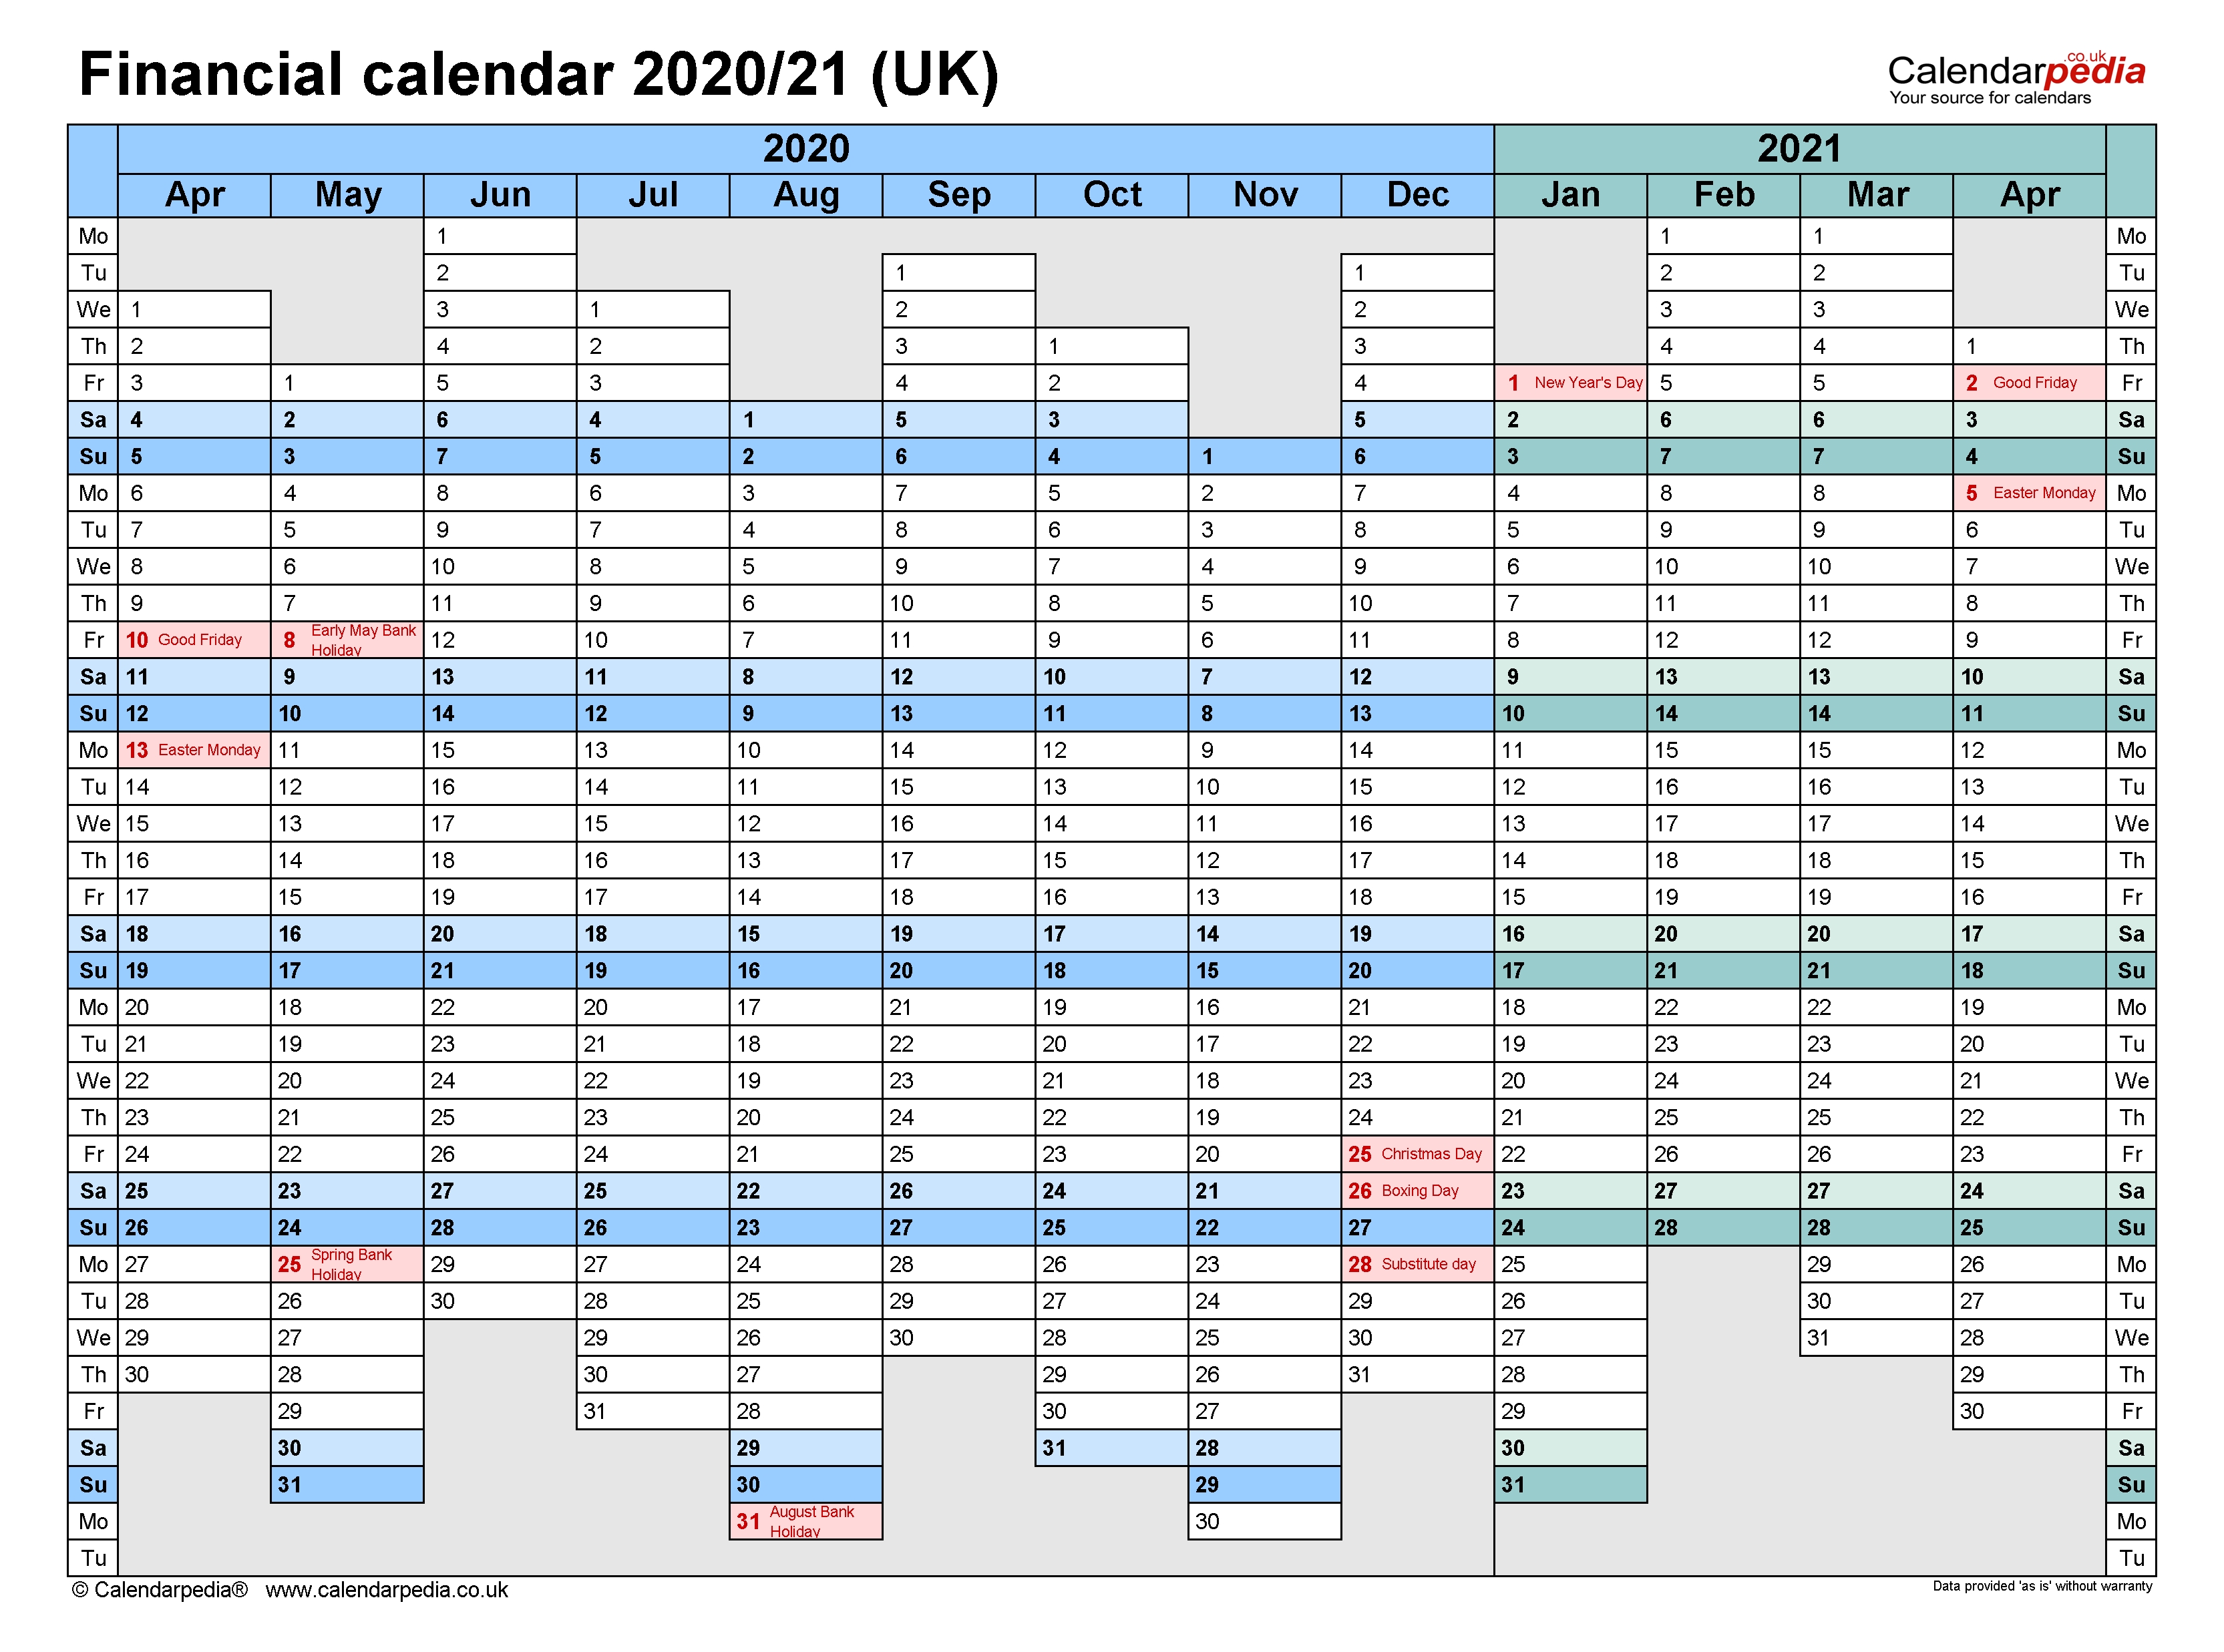 Financial Calendars 2020/21 Uk In Pdf Format Financial Calendar 2021/21 Excel